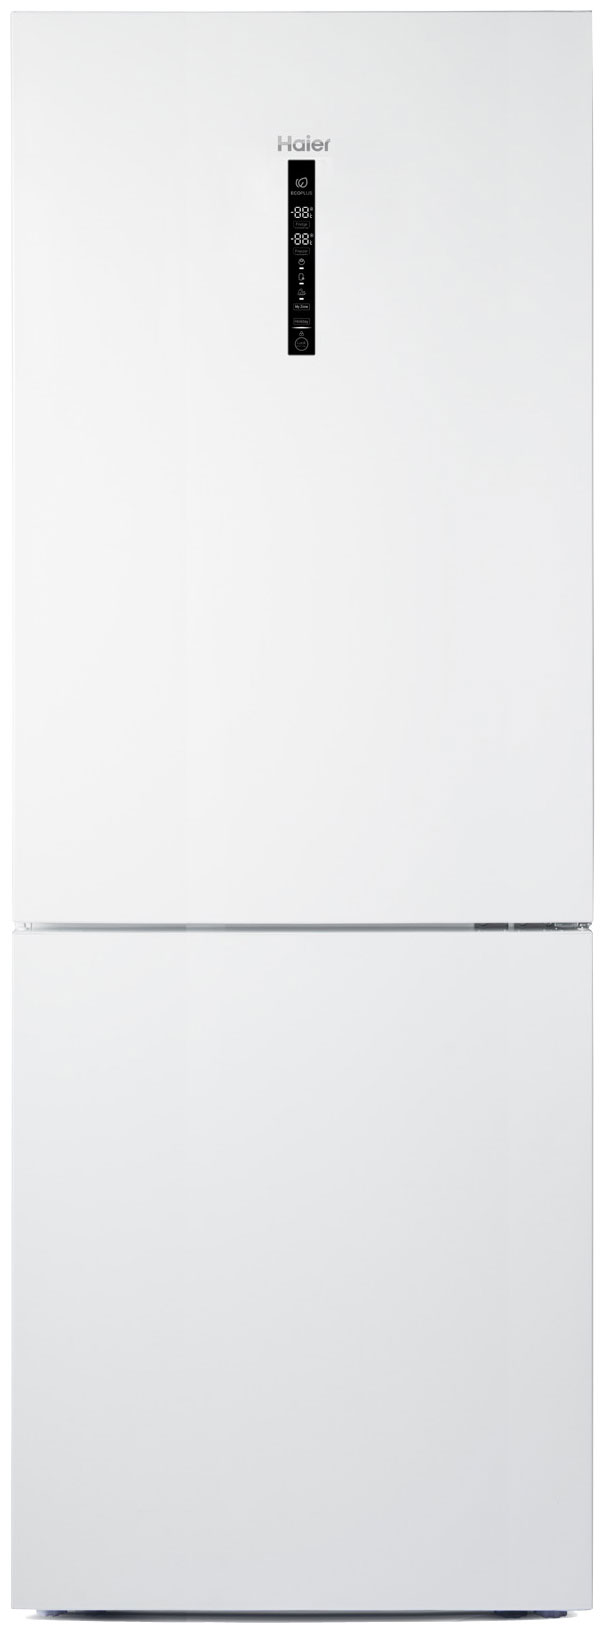 цена Двухкамерный холодильник Haier C4F 744 CWG